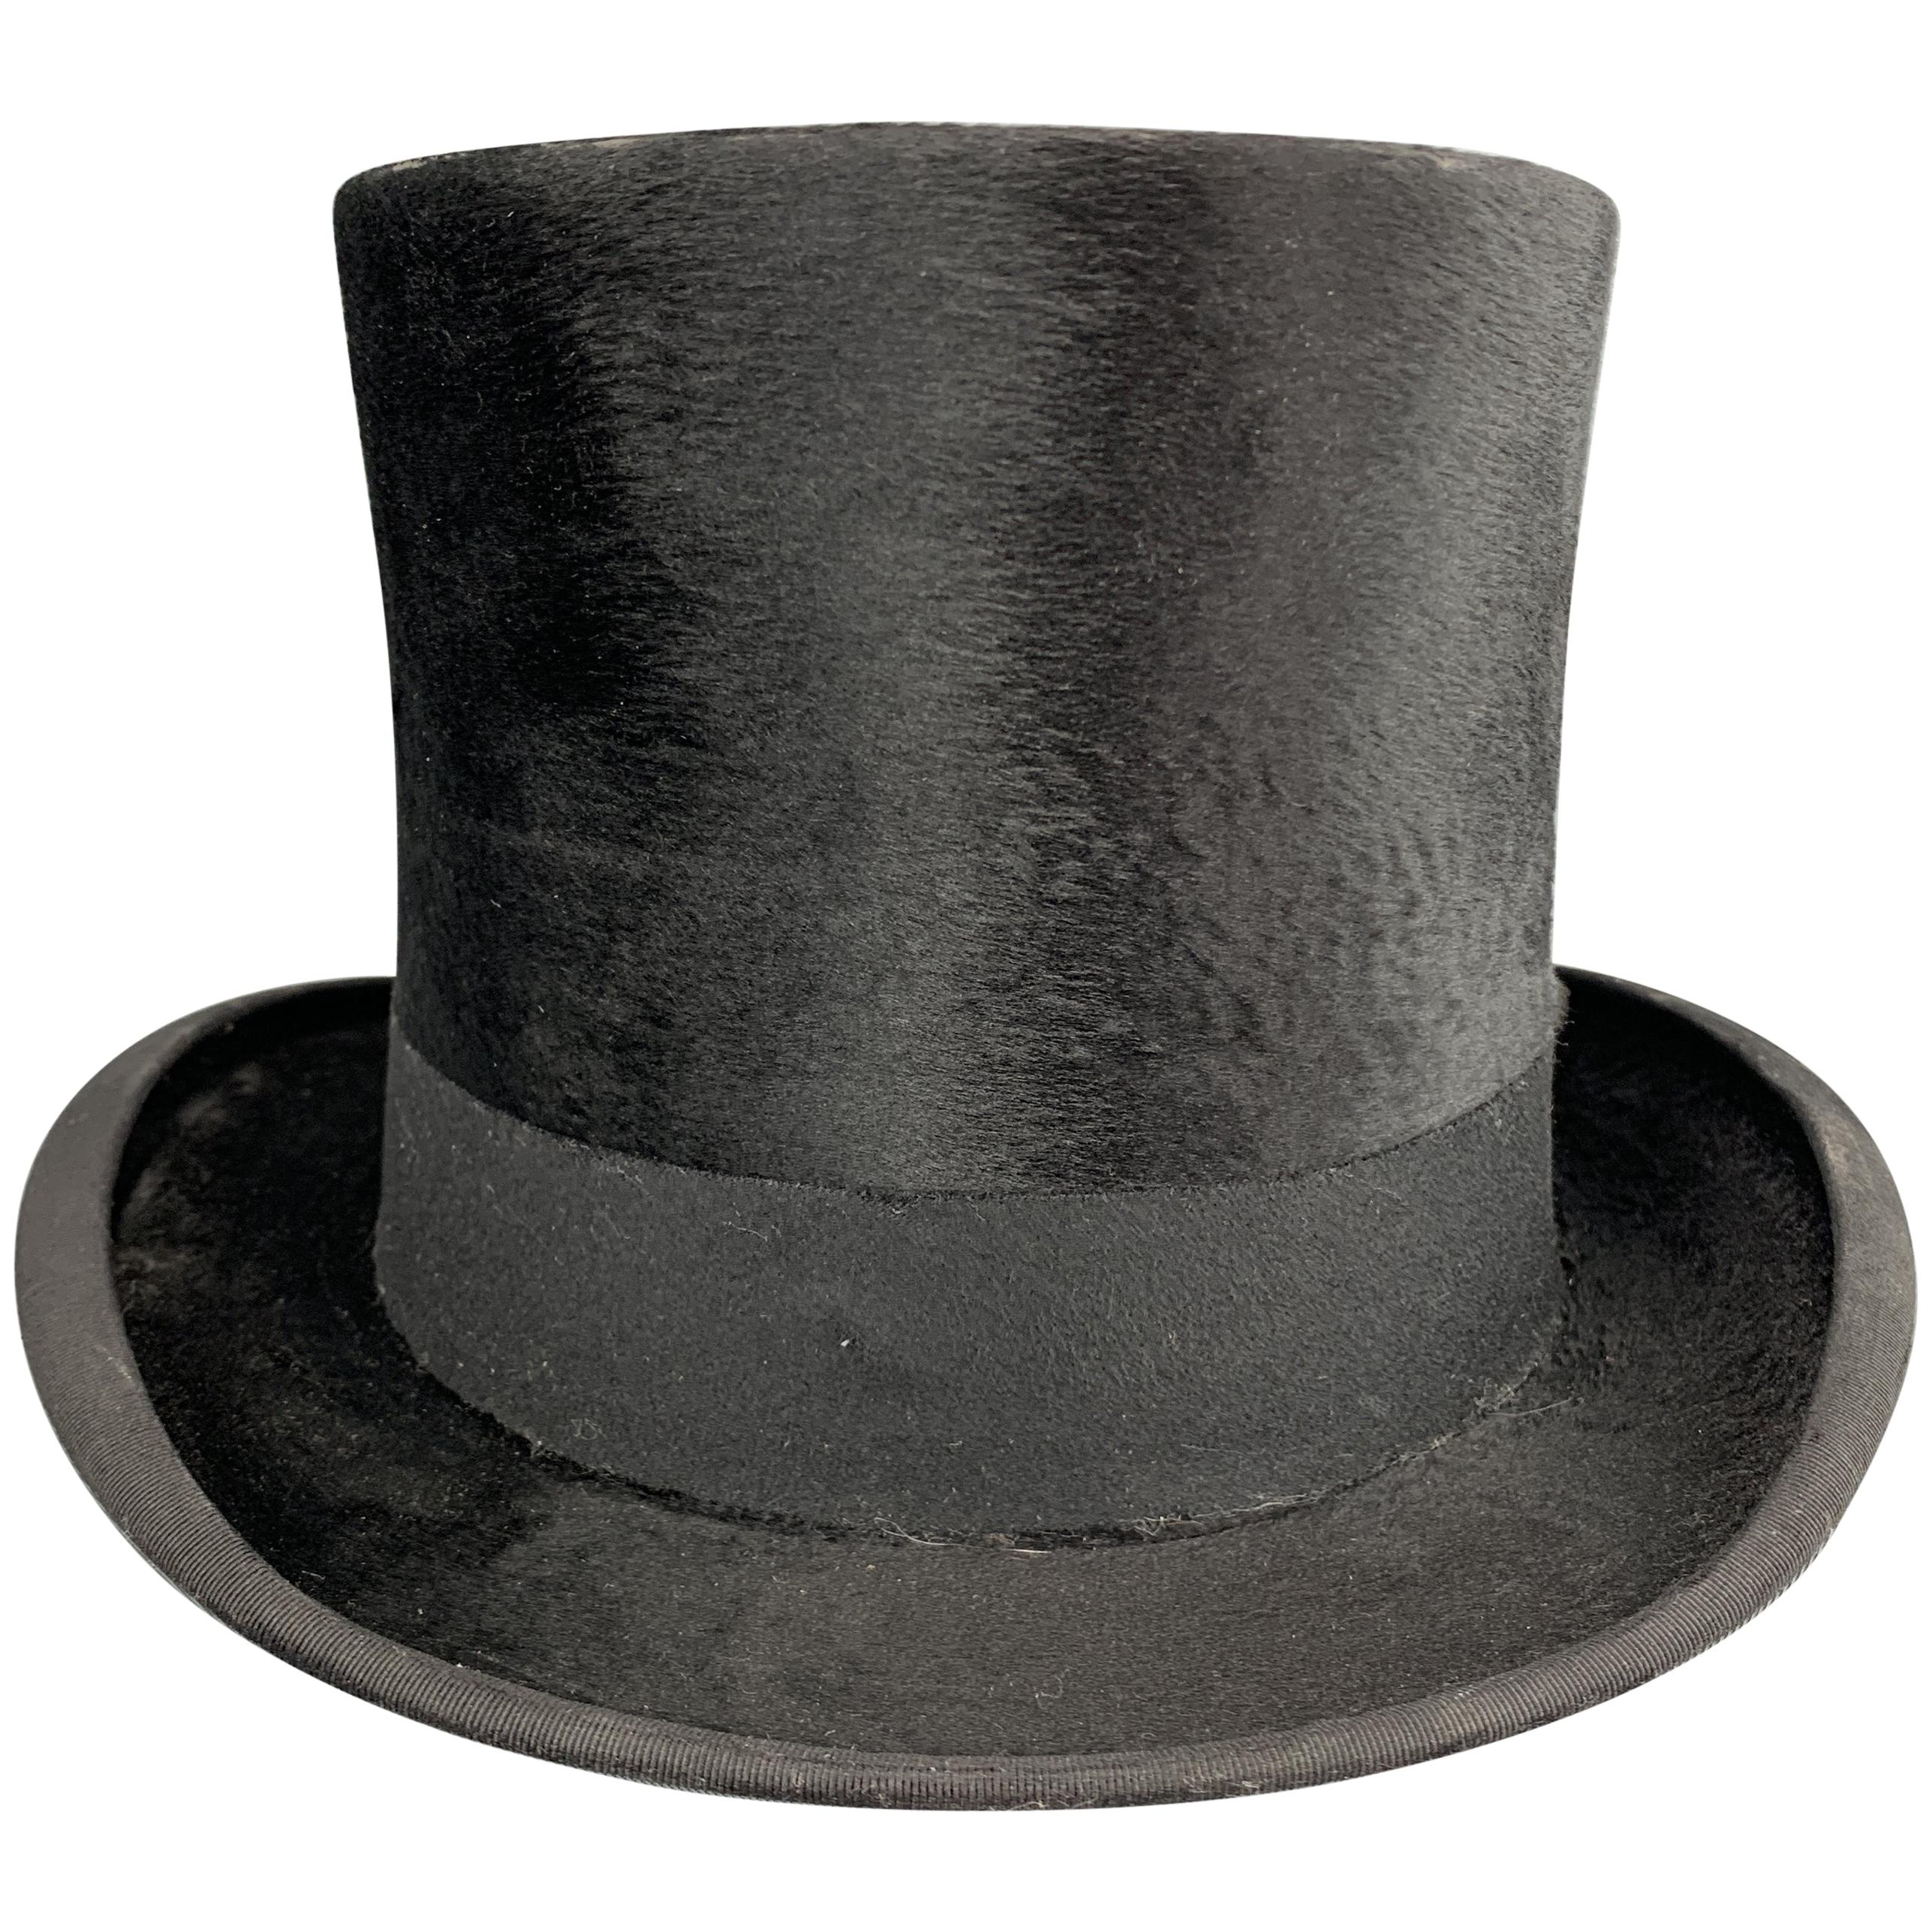 DOBBS Vintage Size 7 1/8 Black Beaver Top Hat w/ Box